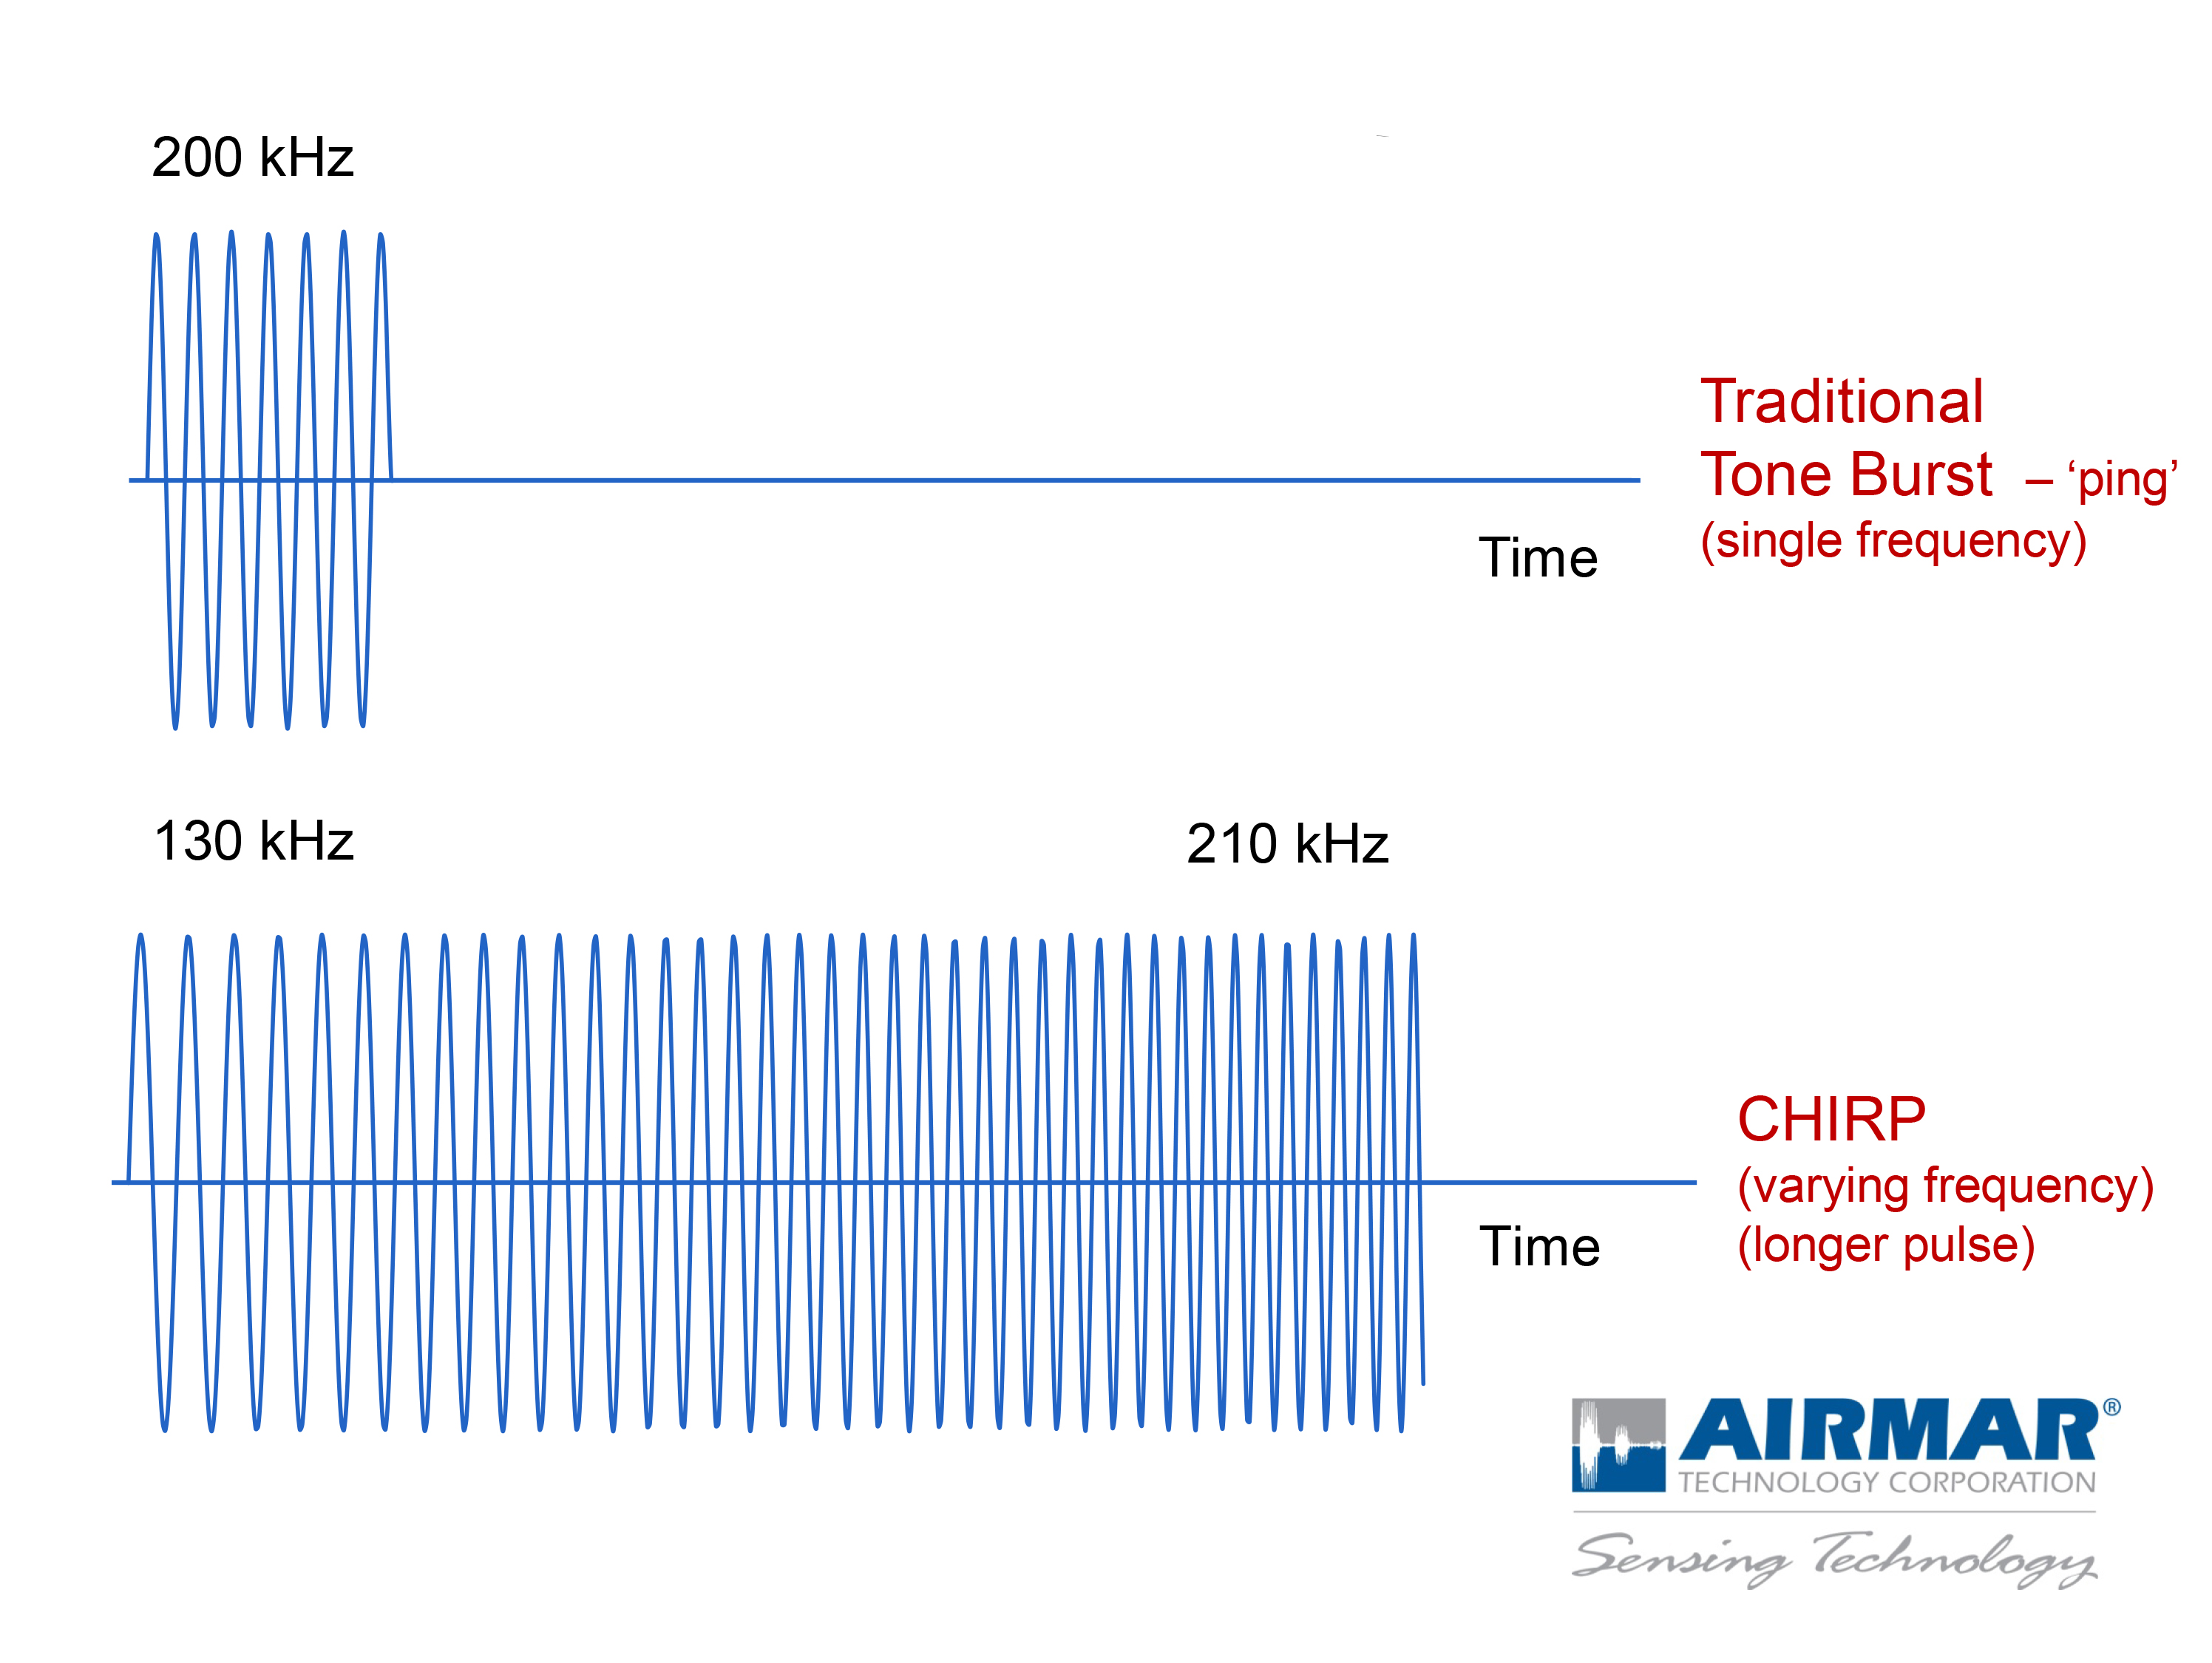 CHIRP fishfinders transmit a longer pulse than regular sonar,